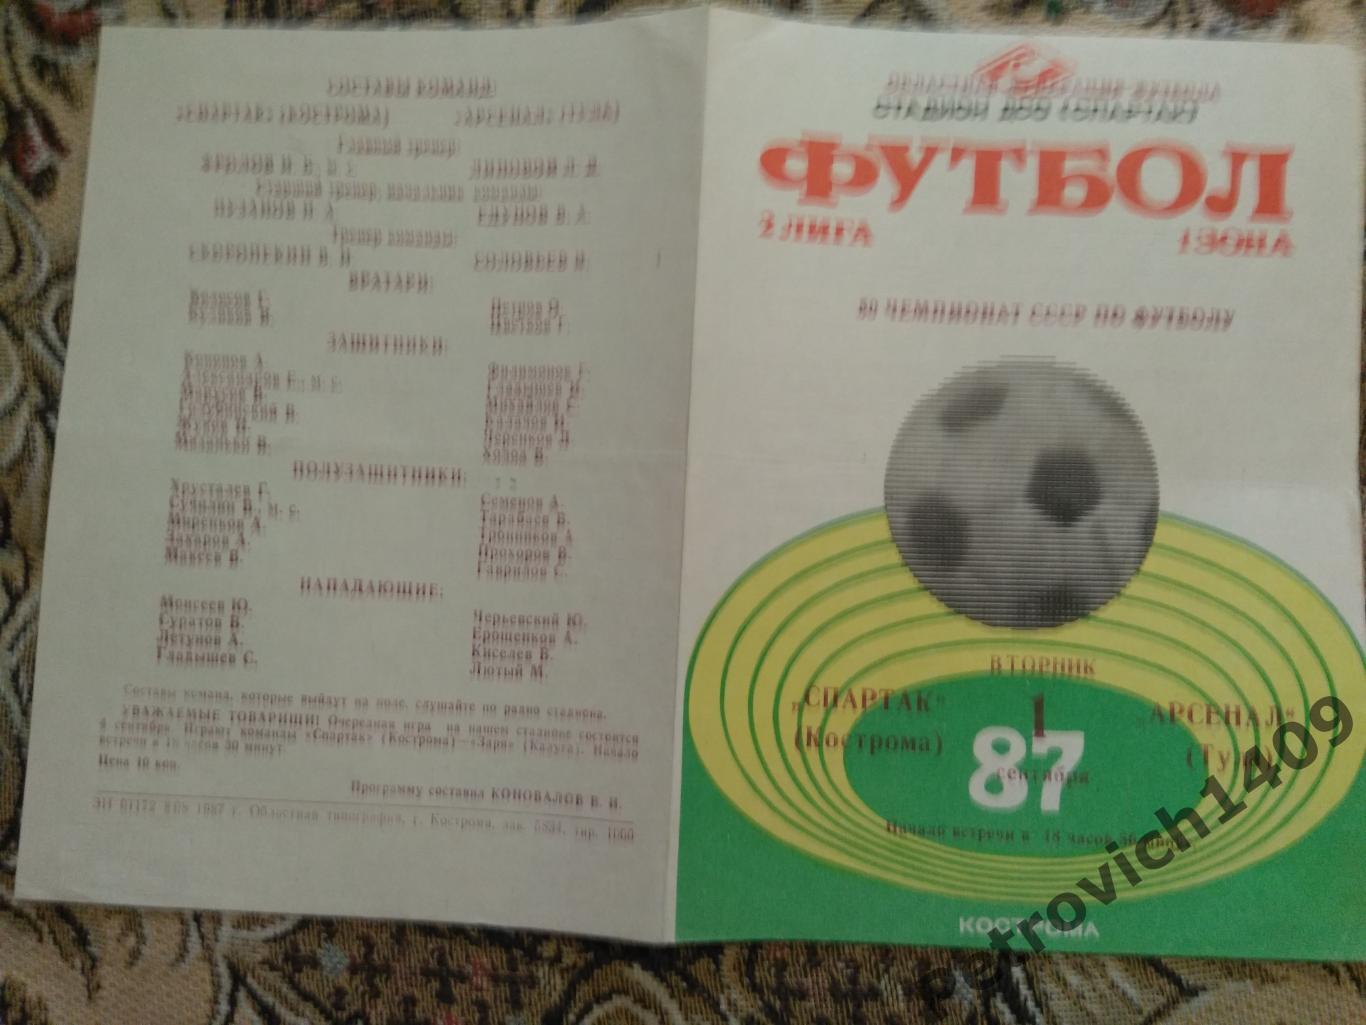 Спартак Кострома - Арсенал Тула 1 сентября 1987 год